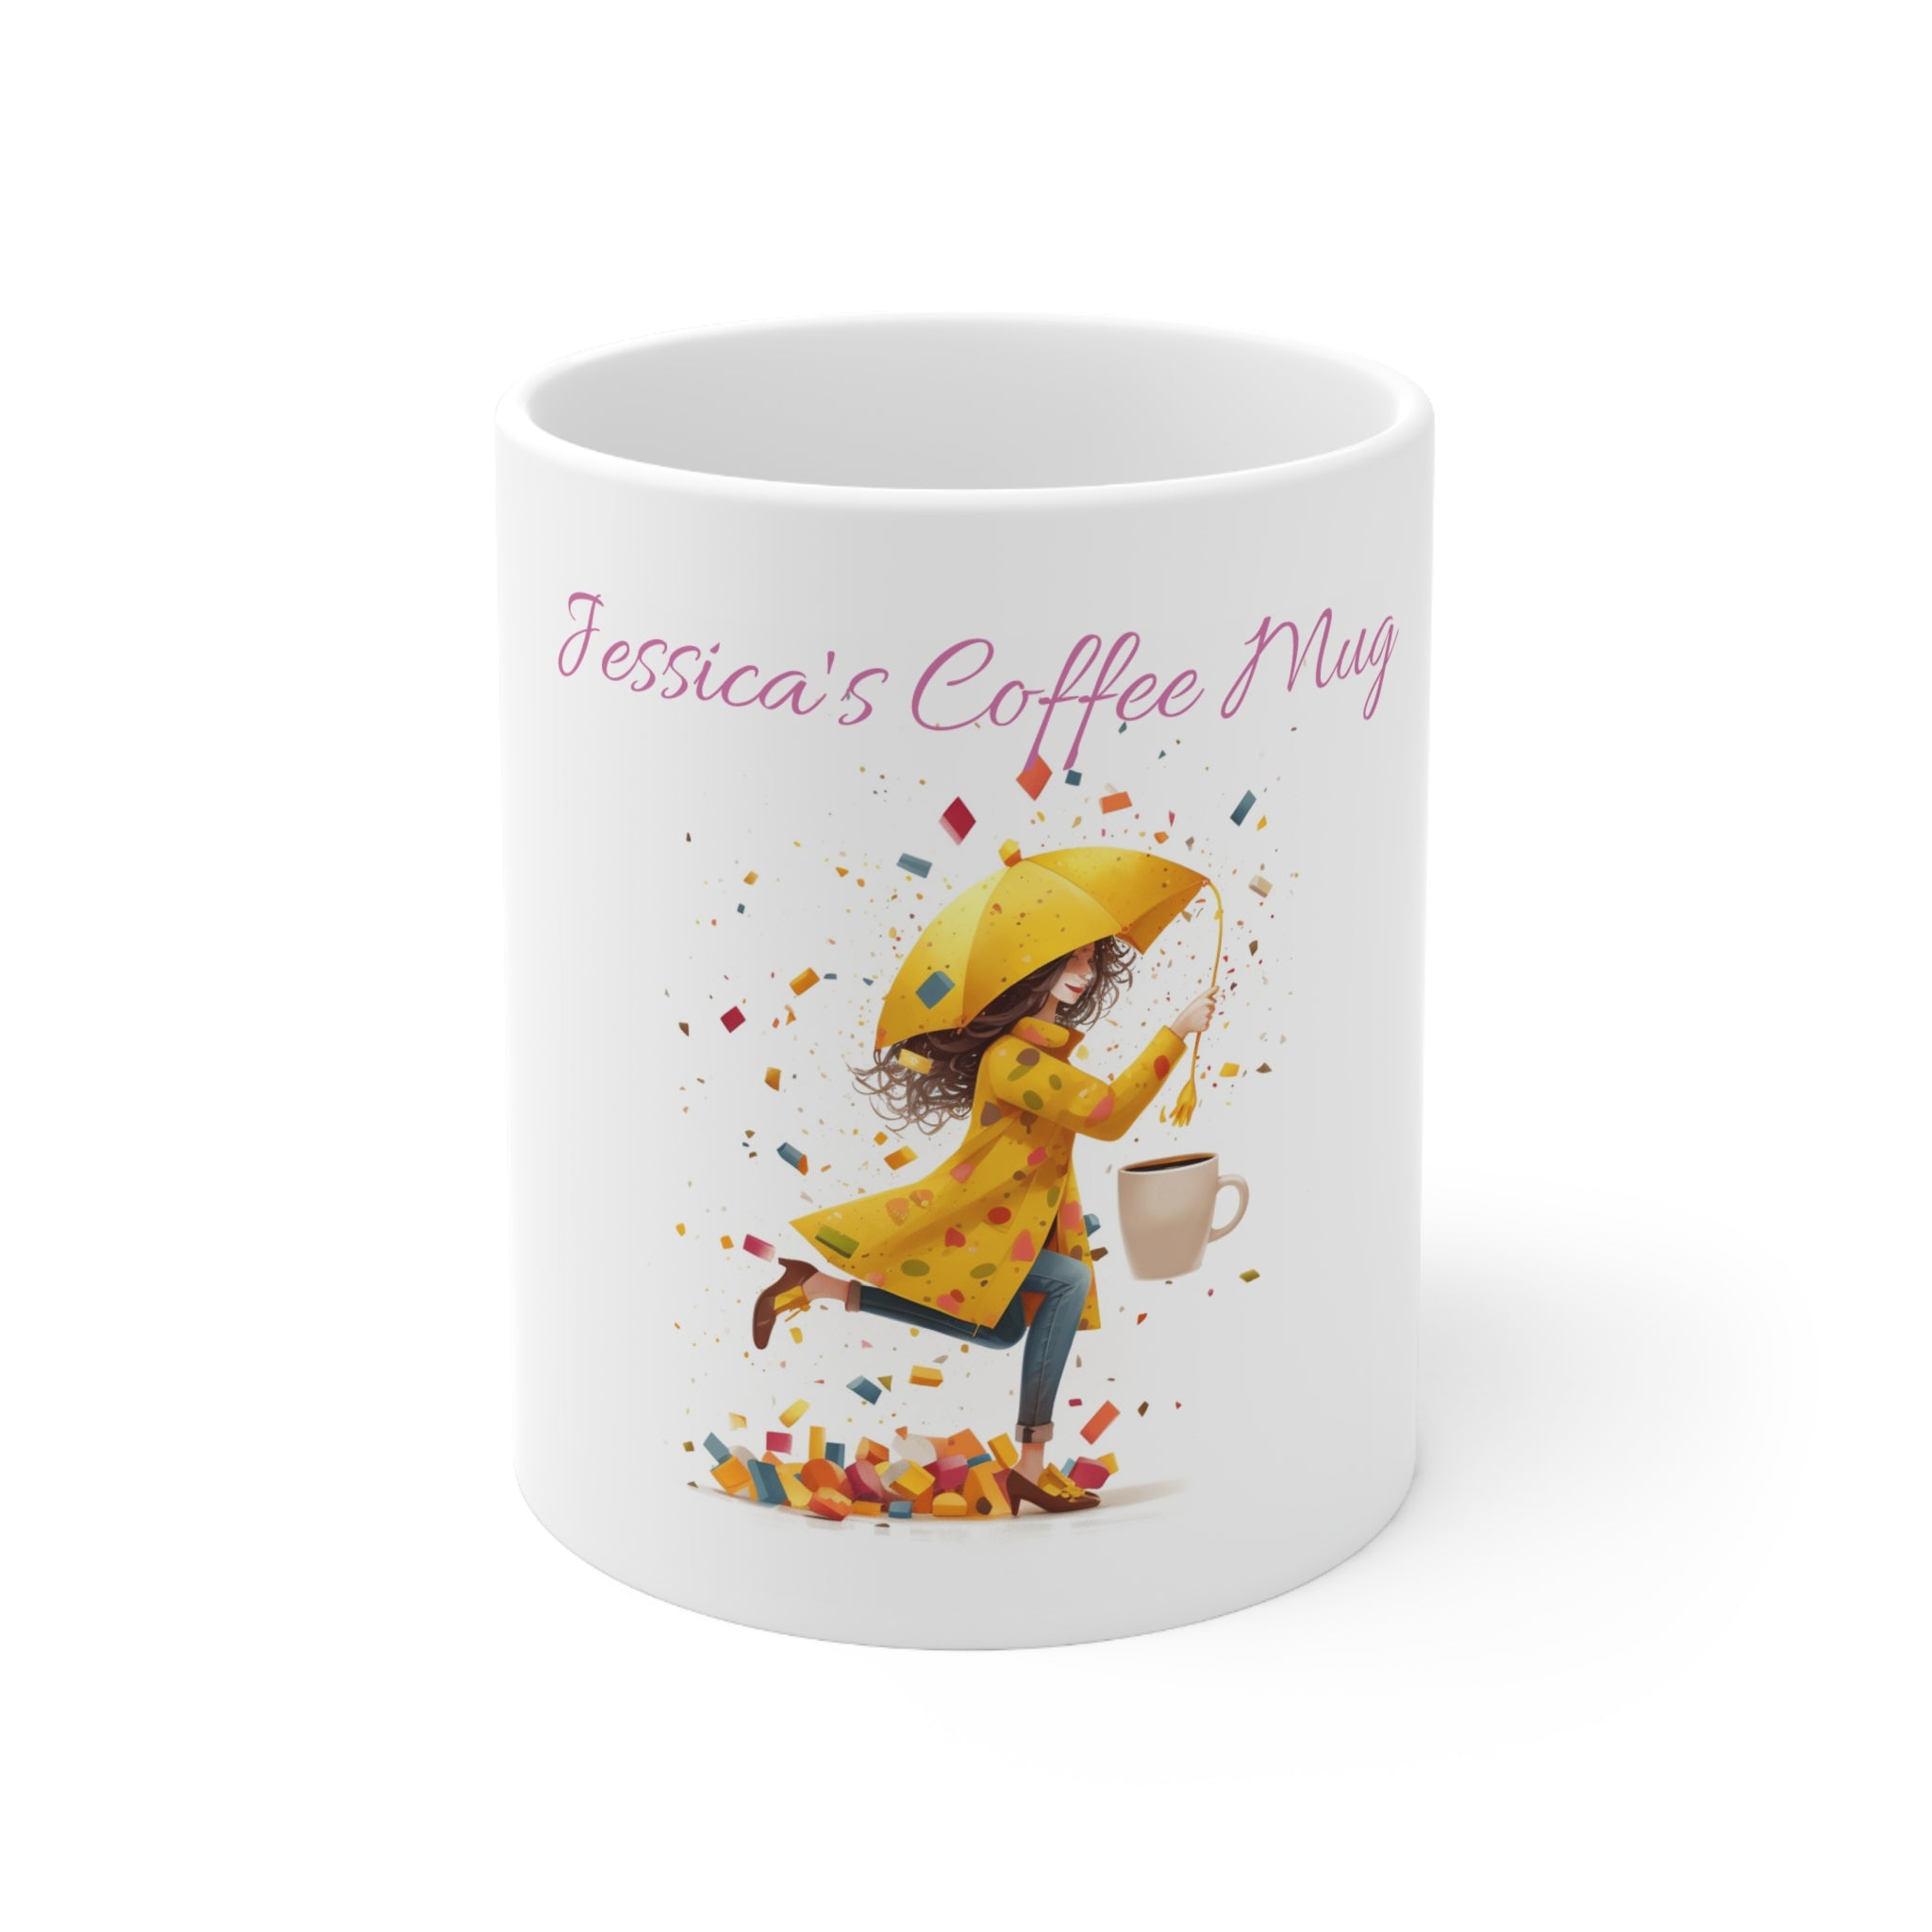 Magical Ceramic Mug 11oz - Enchanted Jessica's Coffee Mug  Unique Gift for Coffee Lovers Enchanted Jessica's Coffee Mug  Magical Ceramic Cup